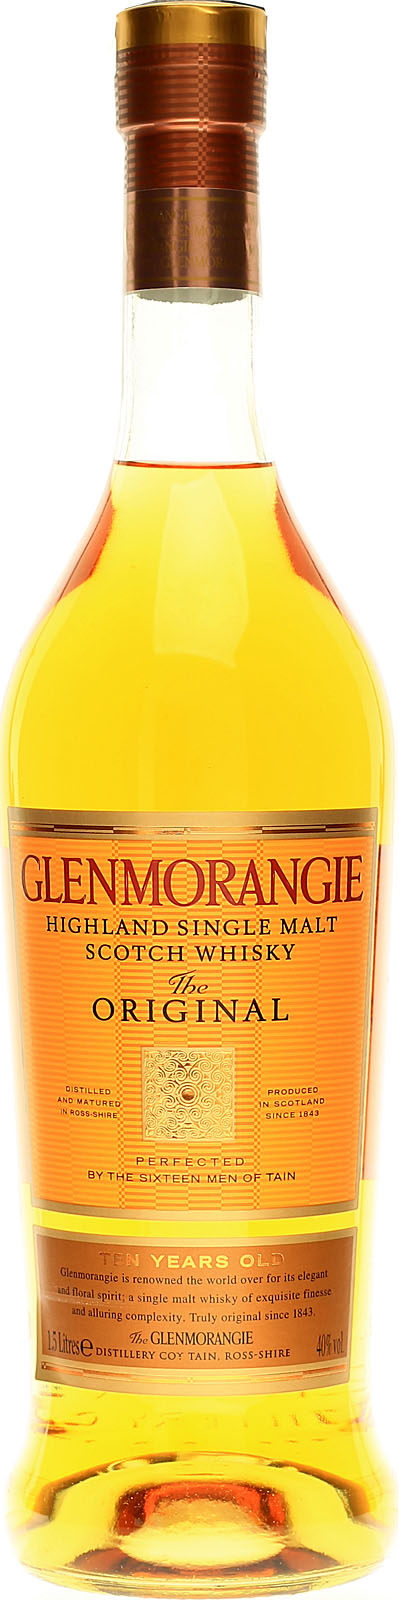 Glenmorangie The Original Magnum, Highland Single Malt